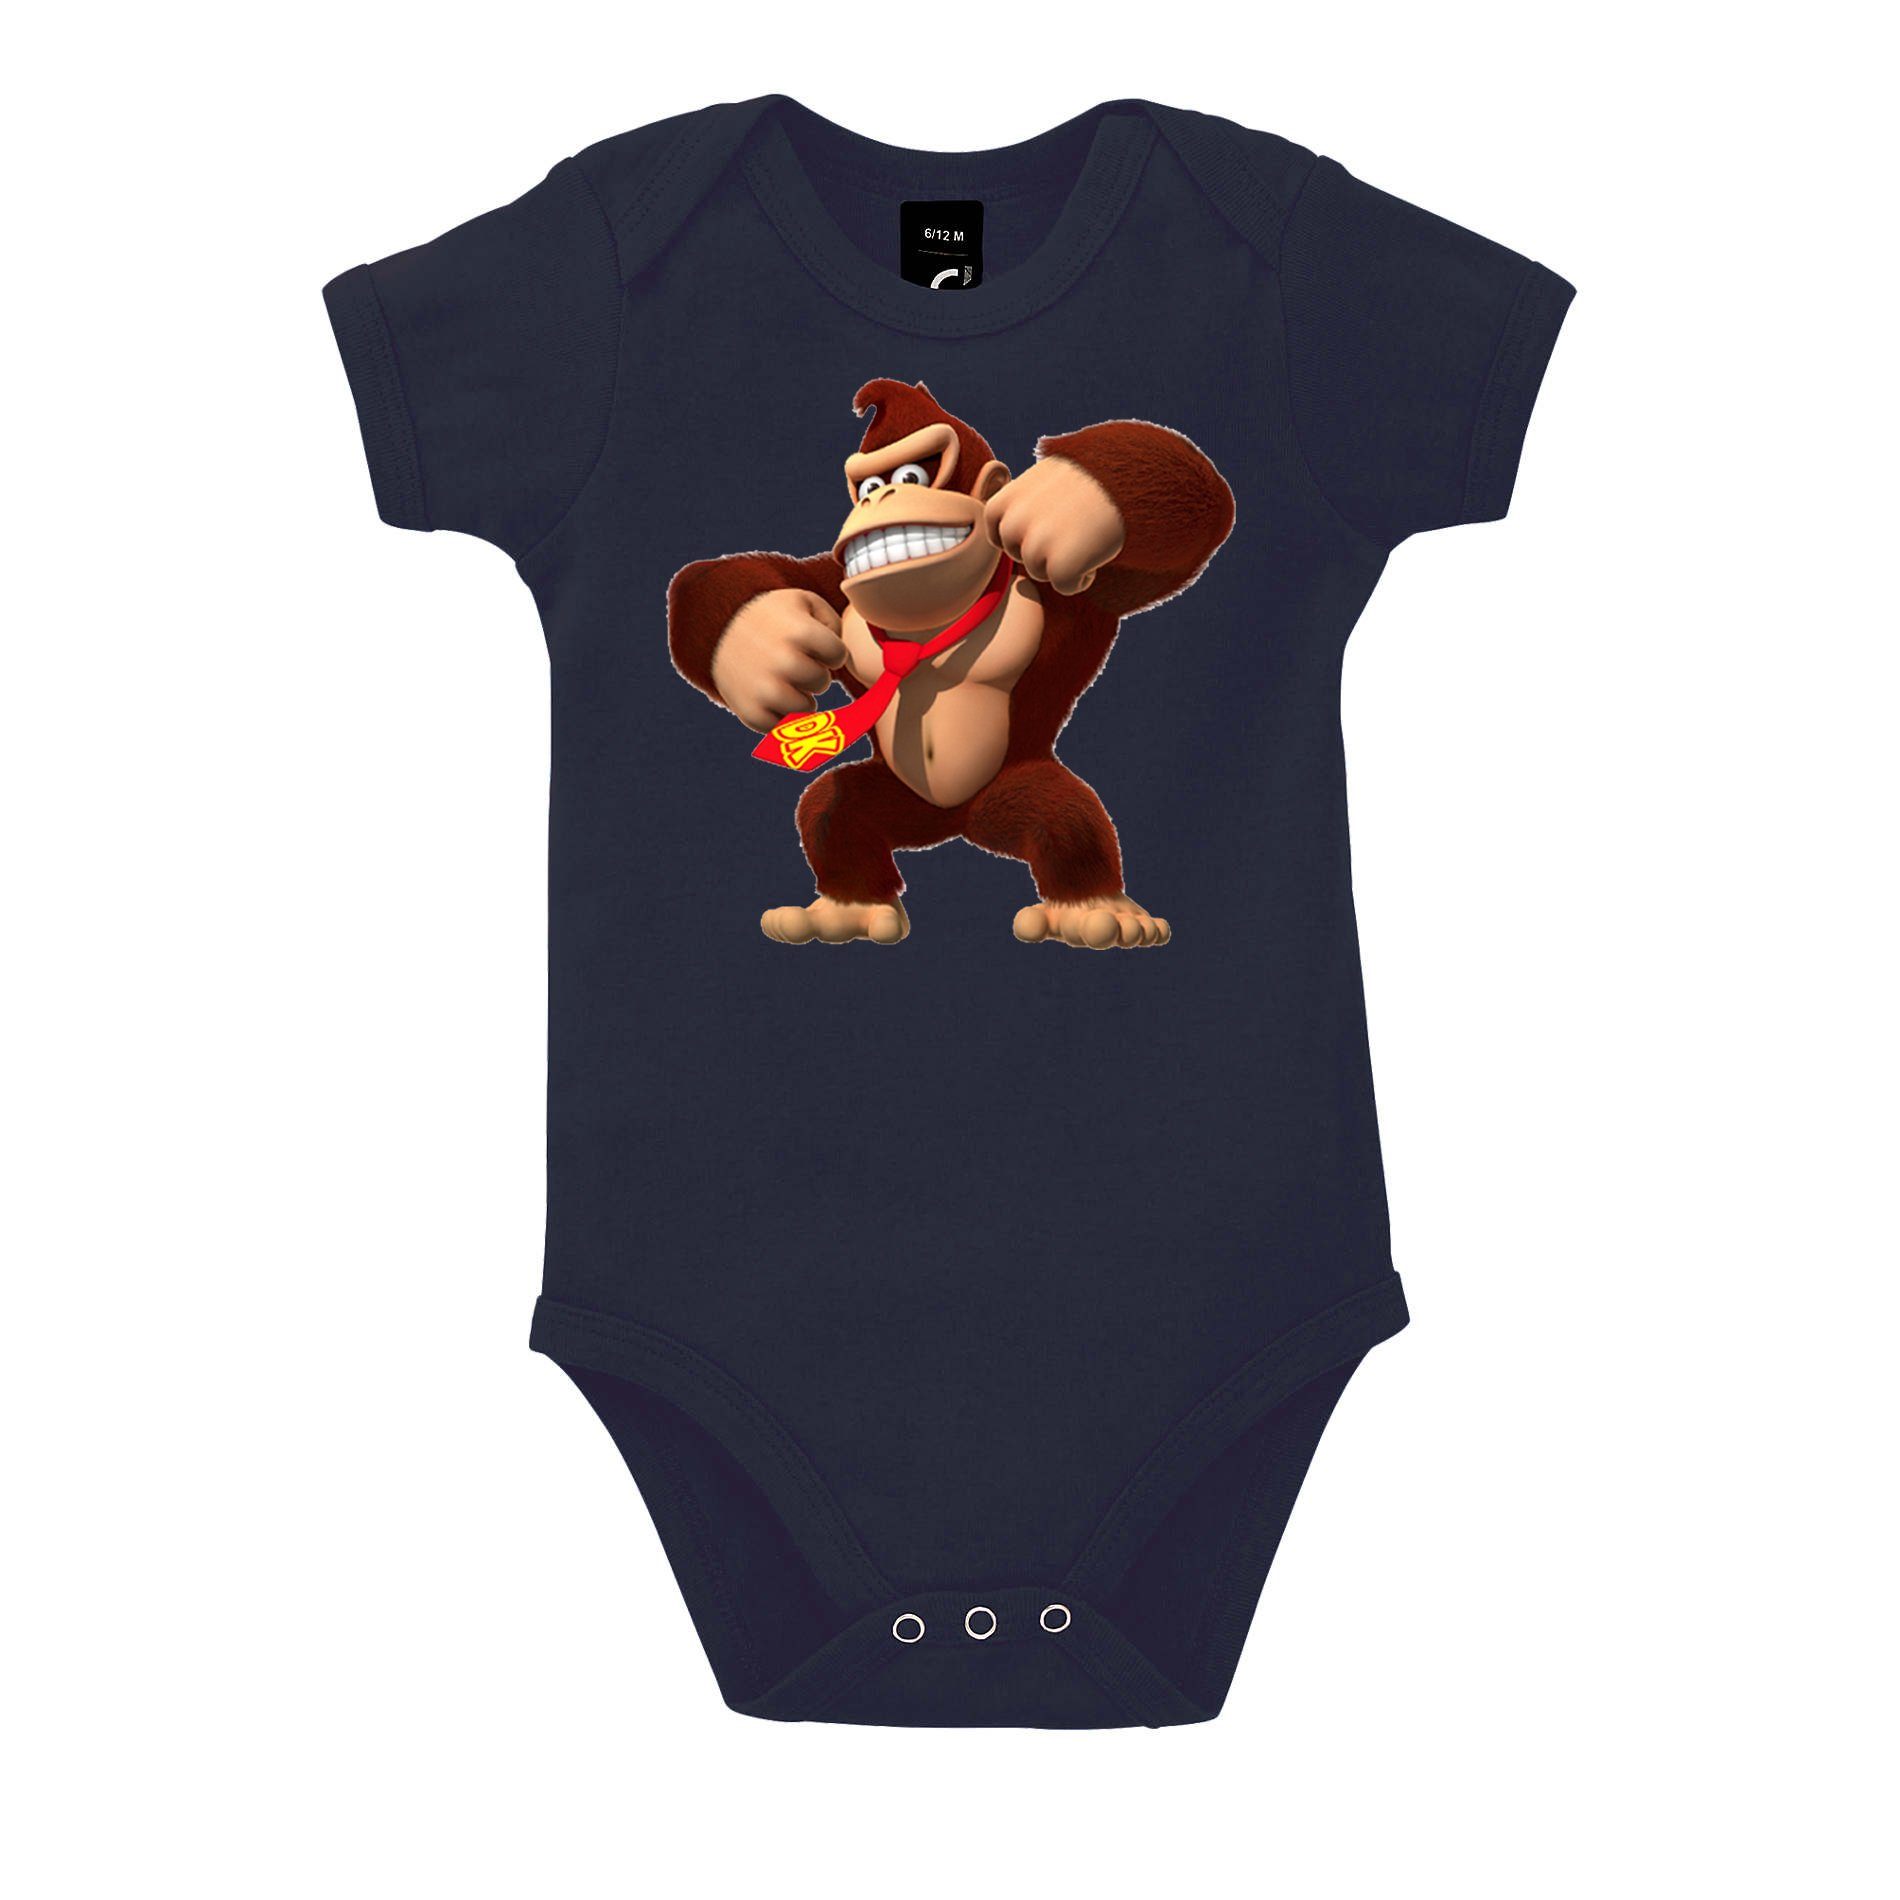 Blondie & Brownie Strampler Kinder Baby Donkey Kong Gorilla Affe Nintendo mit Druckknopf Navyblau